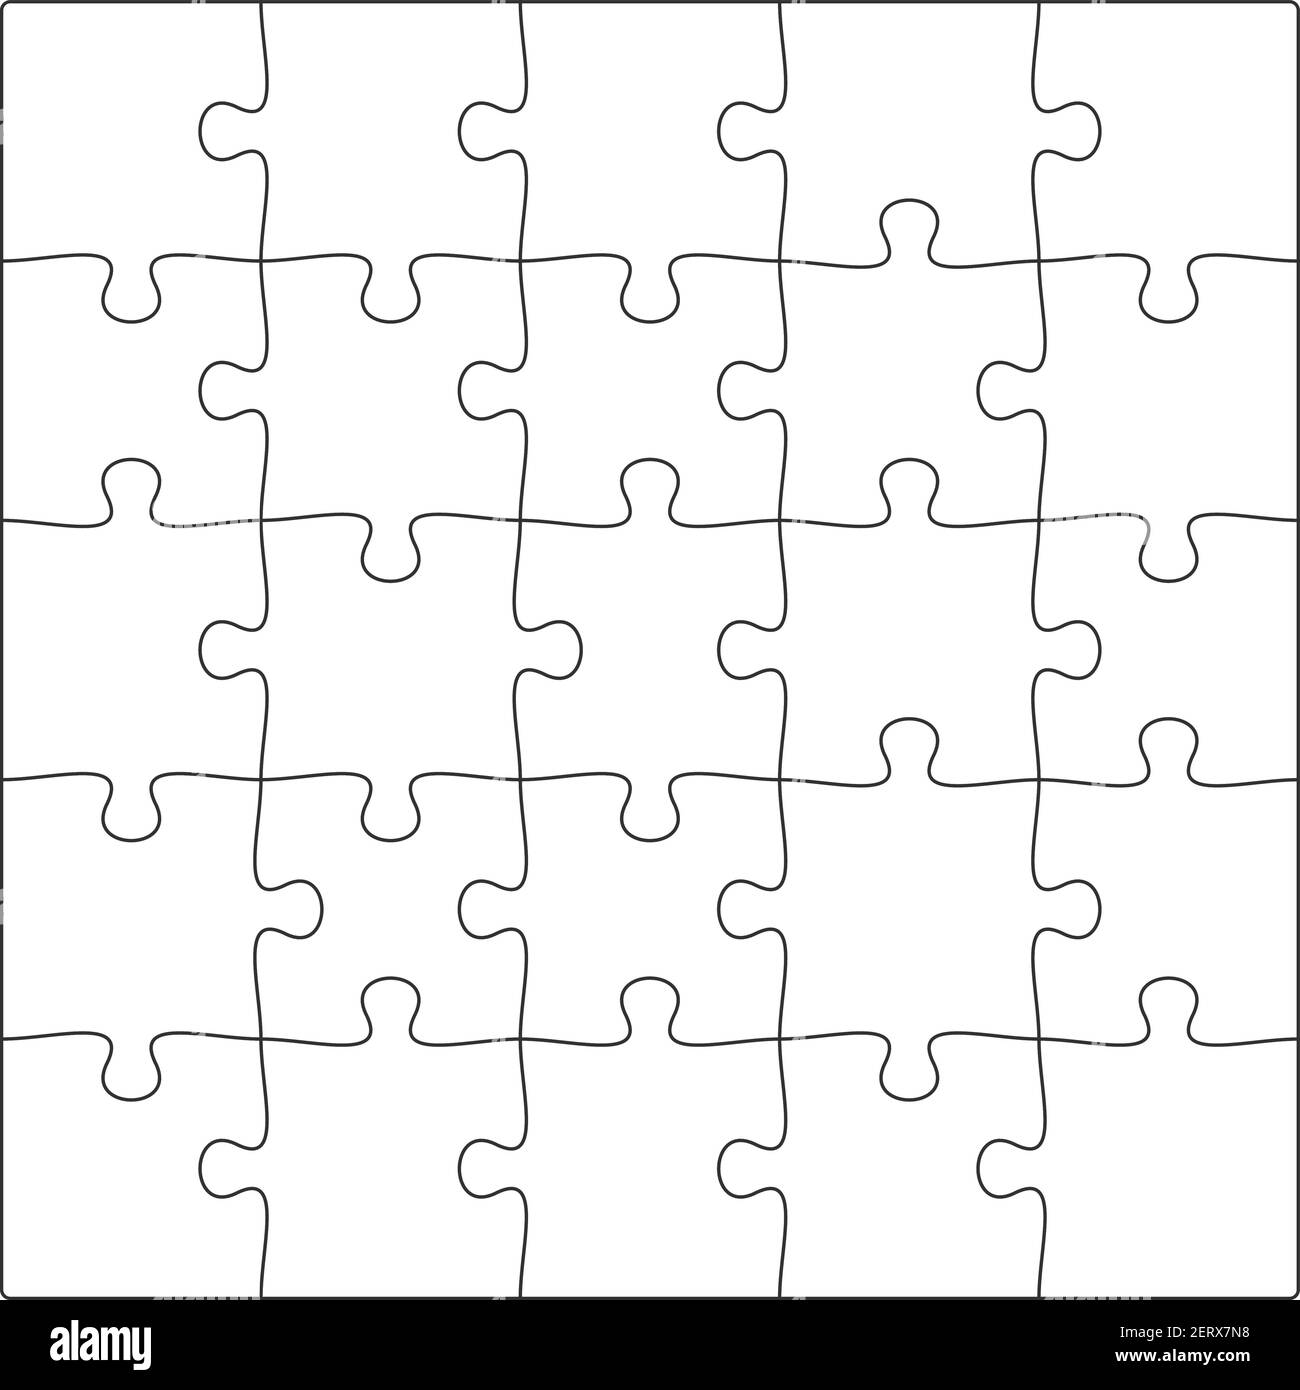 Transparent Puzzle Pieces Stock-Vektorgrafiken kaufen - Alamy